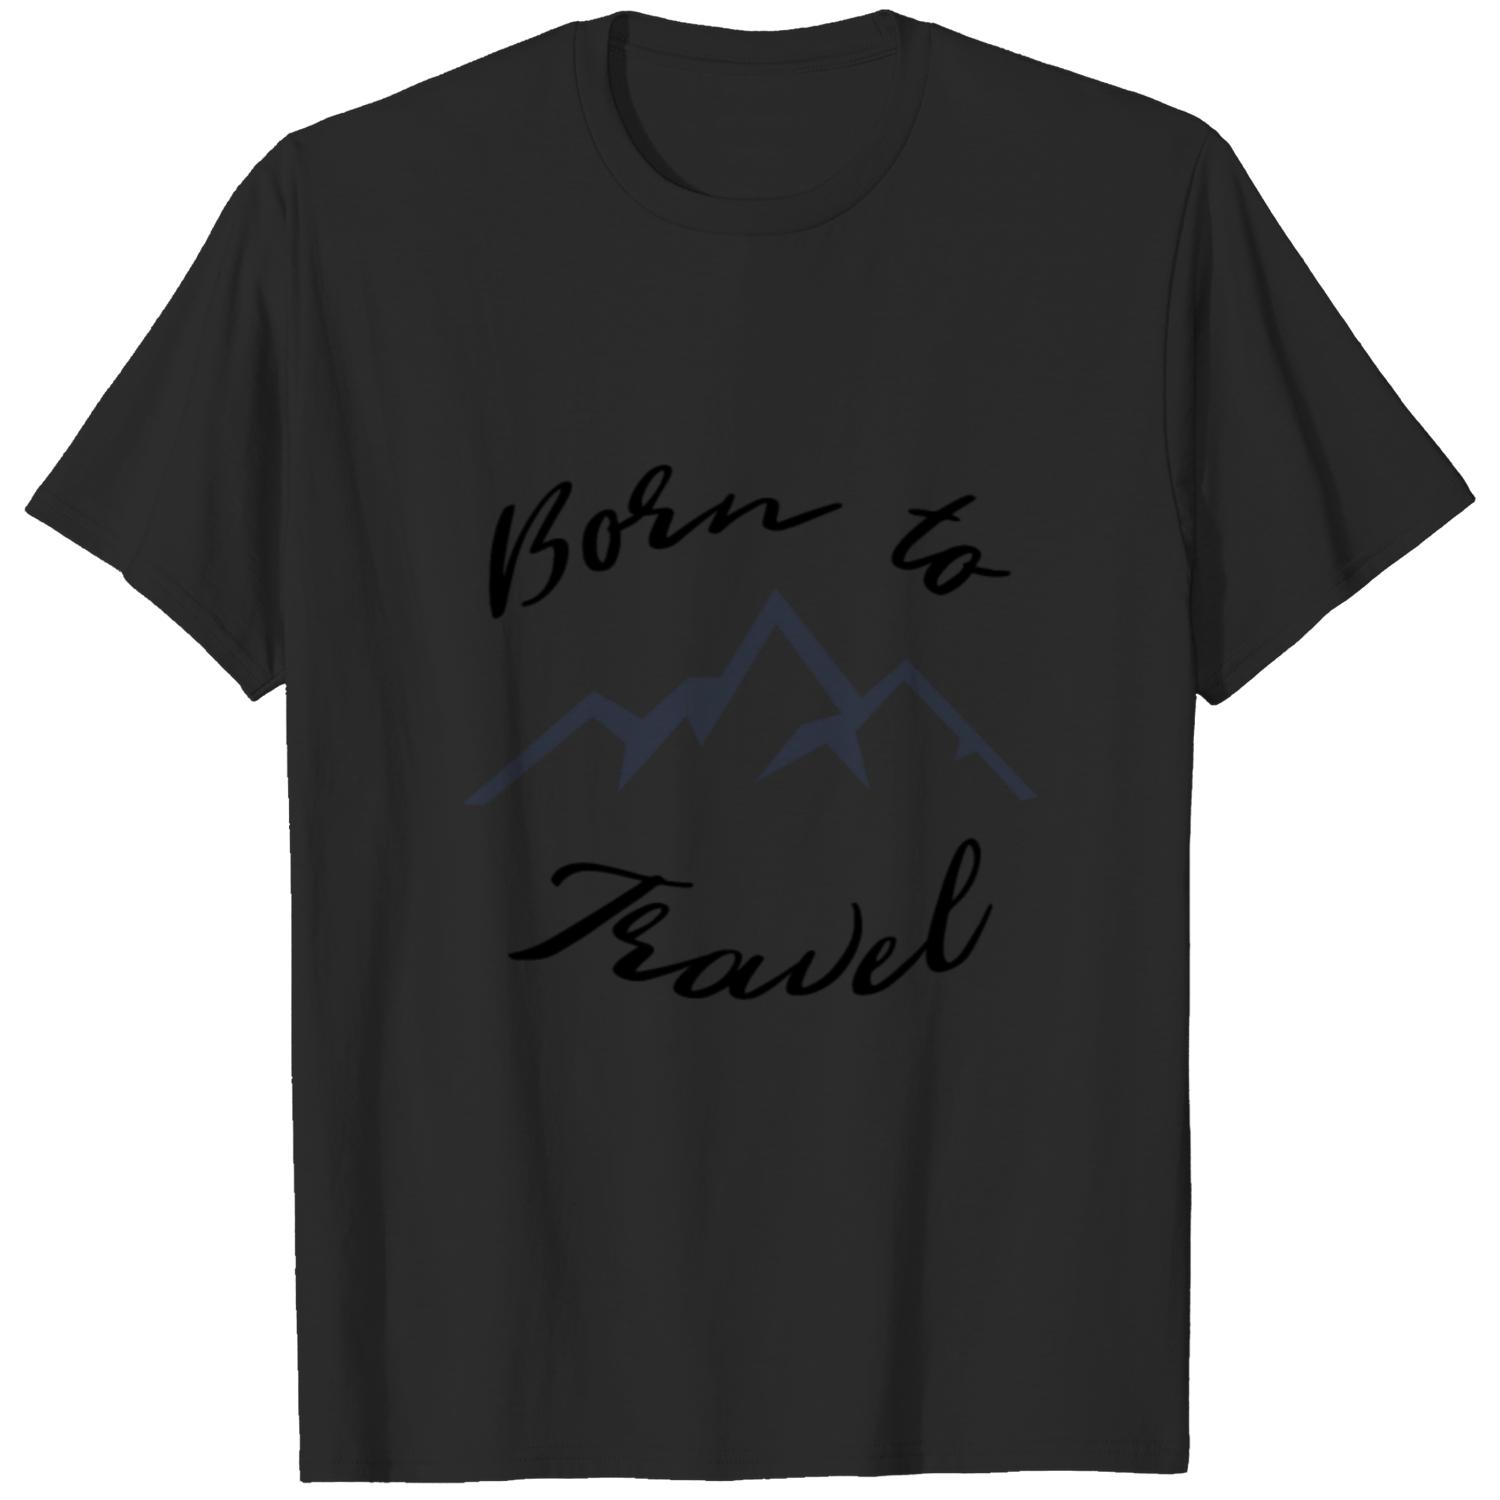 Modern Mountain Edition, Born to Travel T-shirt